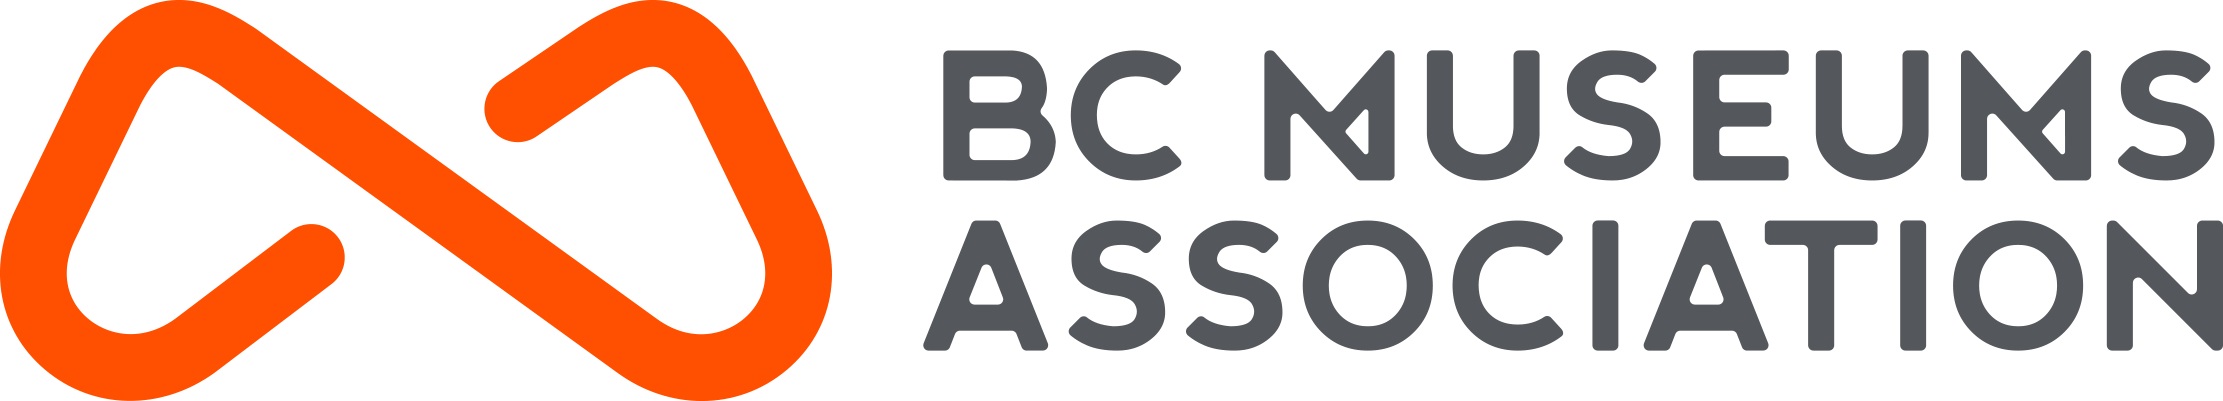 BC Museums Association logo